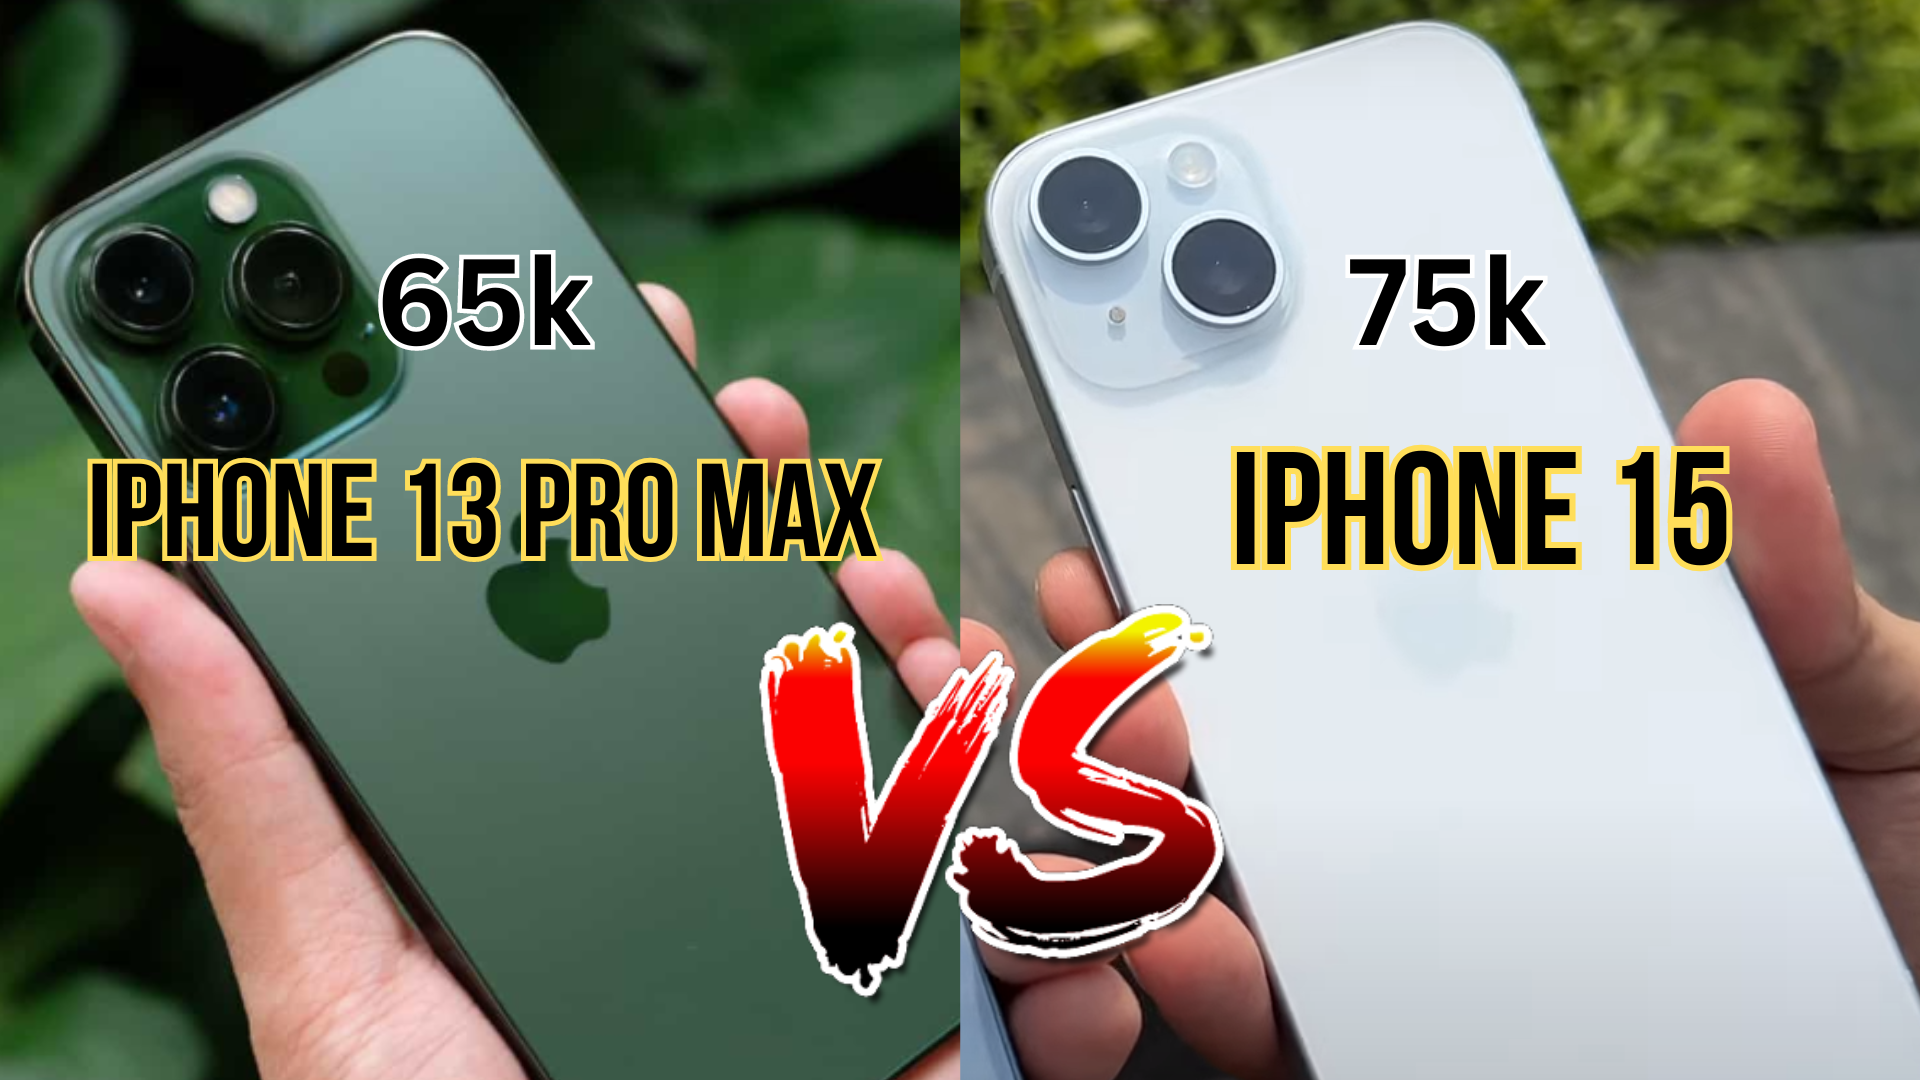 iphone 15 vs 13 pro max img